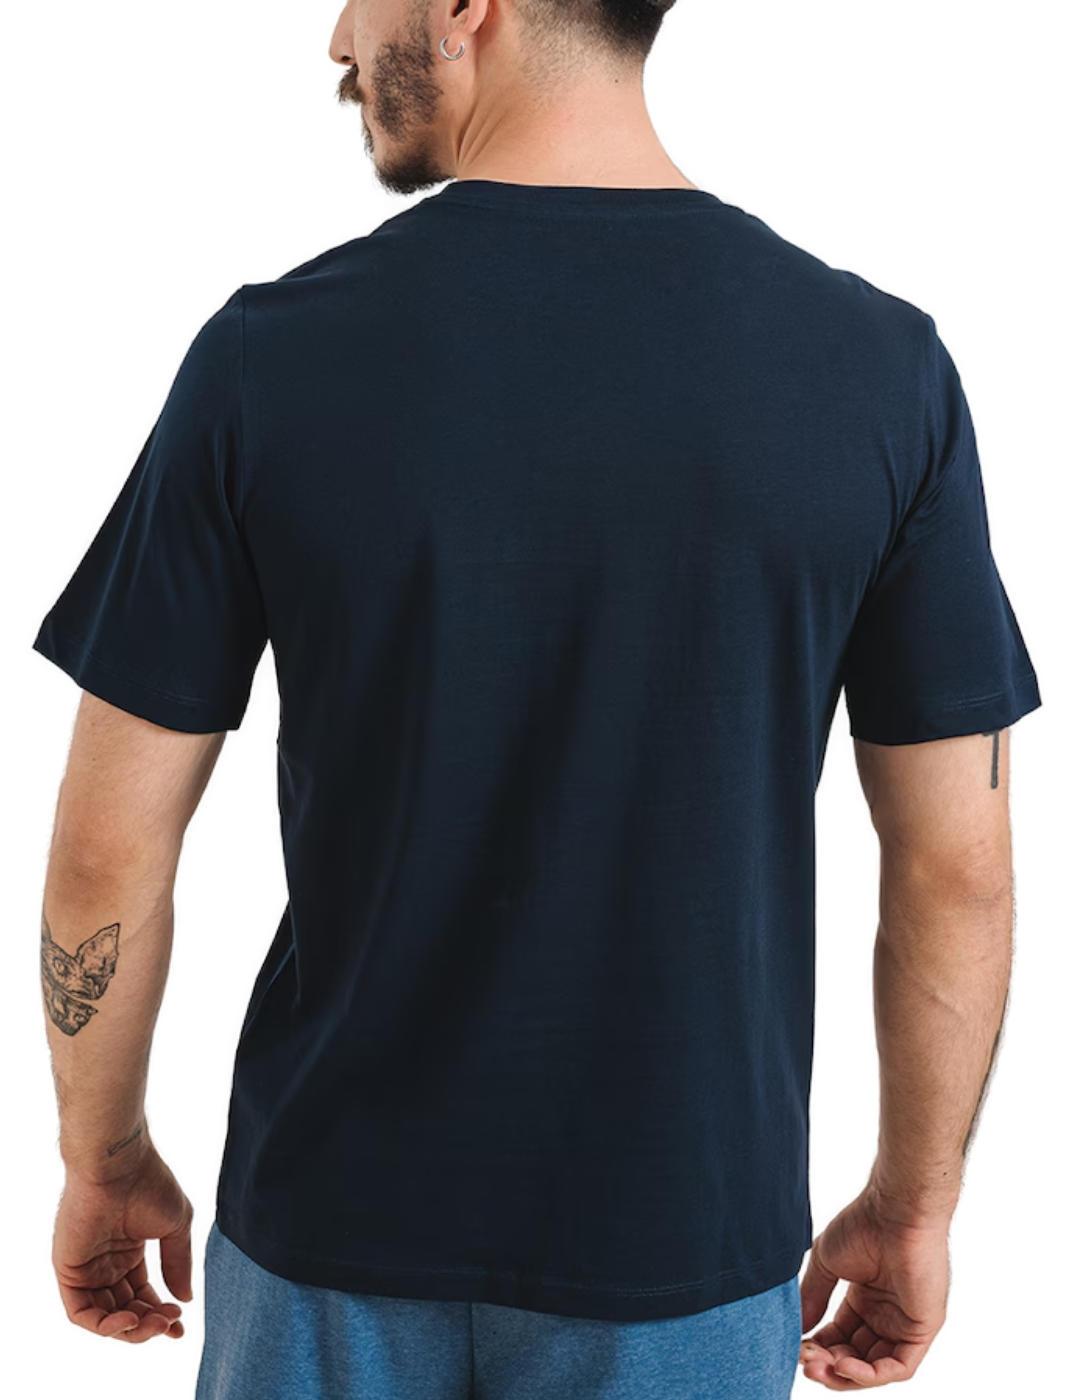 Camiseta Jack&Jones Zion marino manga corta para hombre